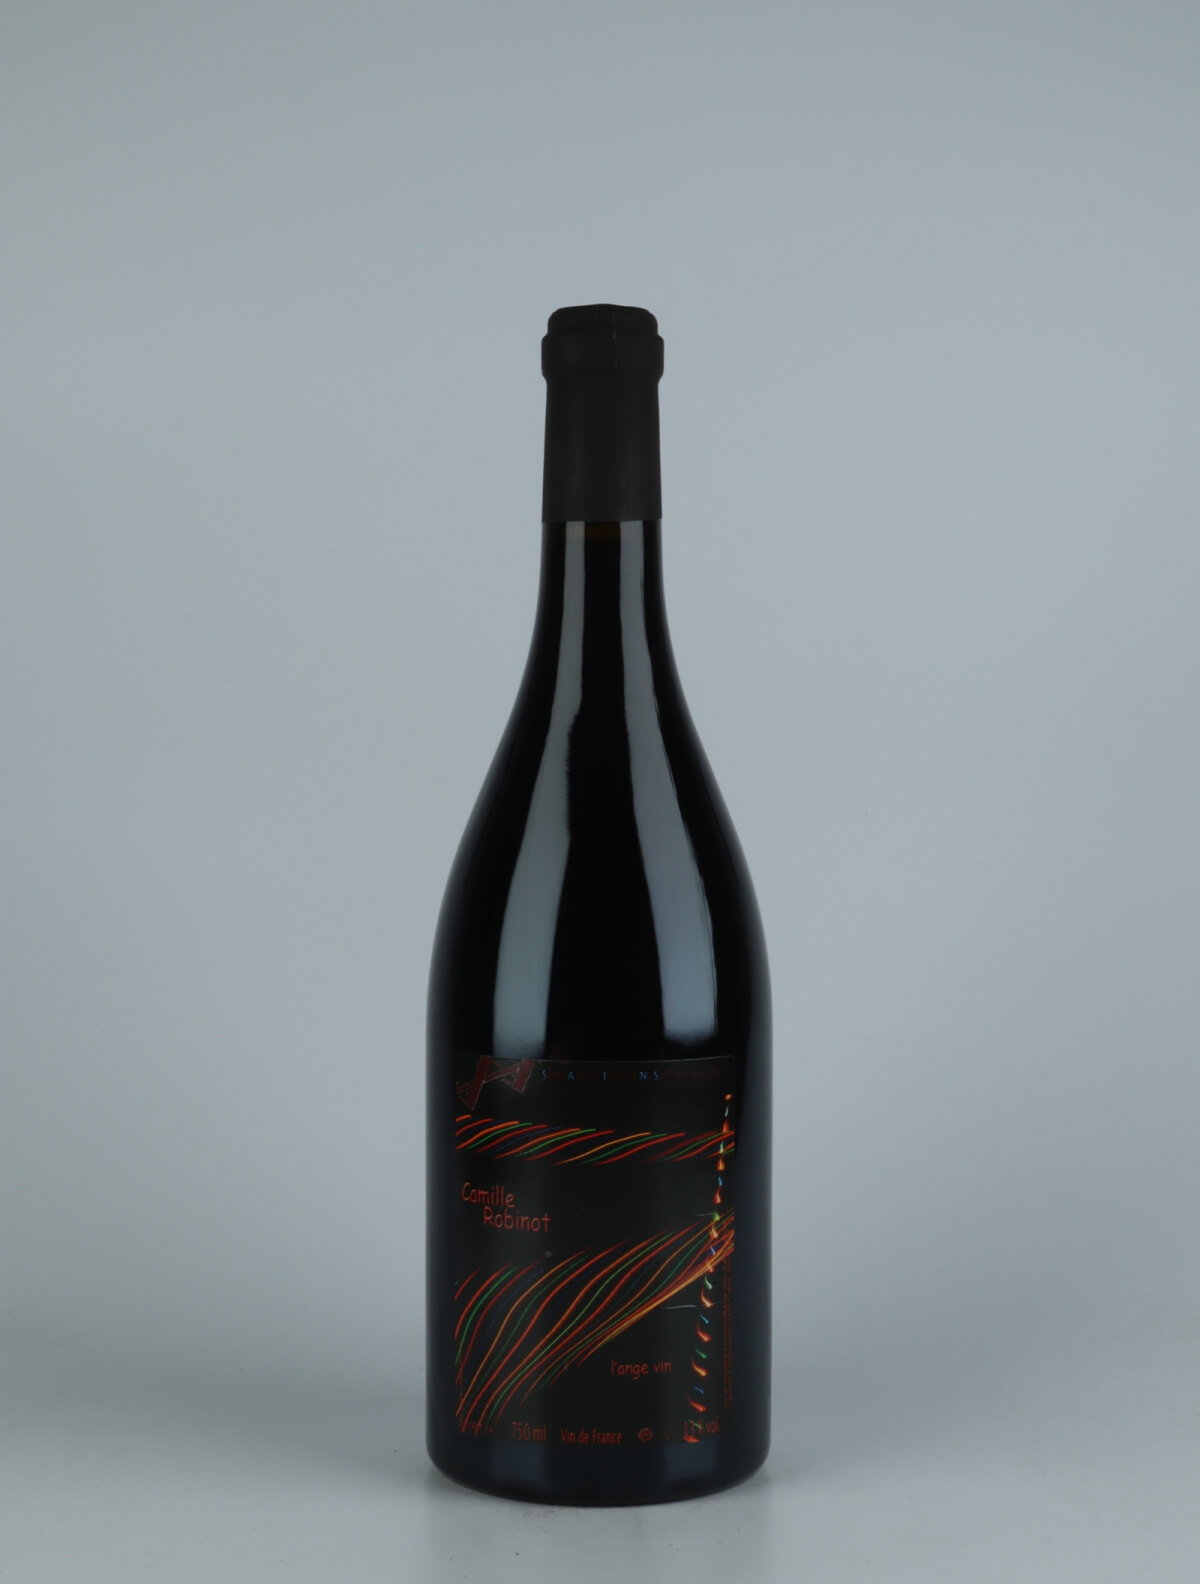 A bottle 2018 Camille Red wine from Jean-Pierre Robinot, Loire in France